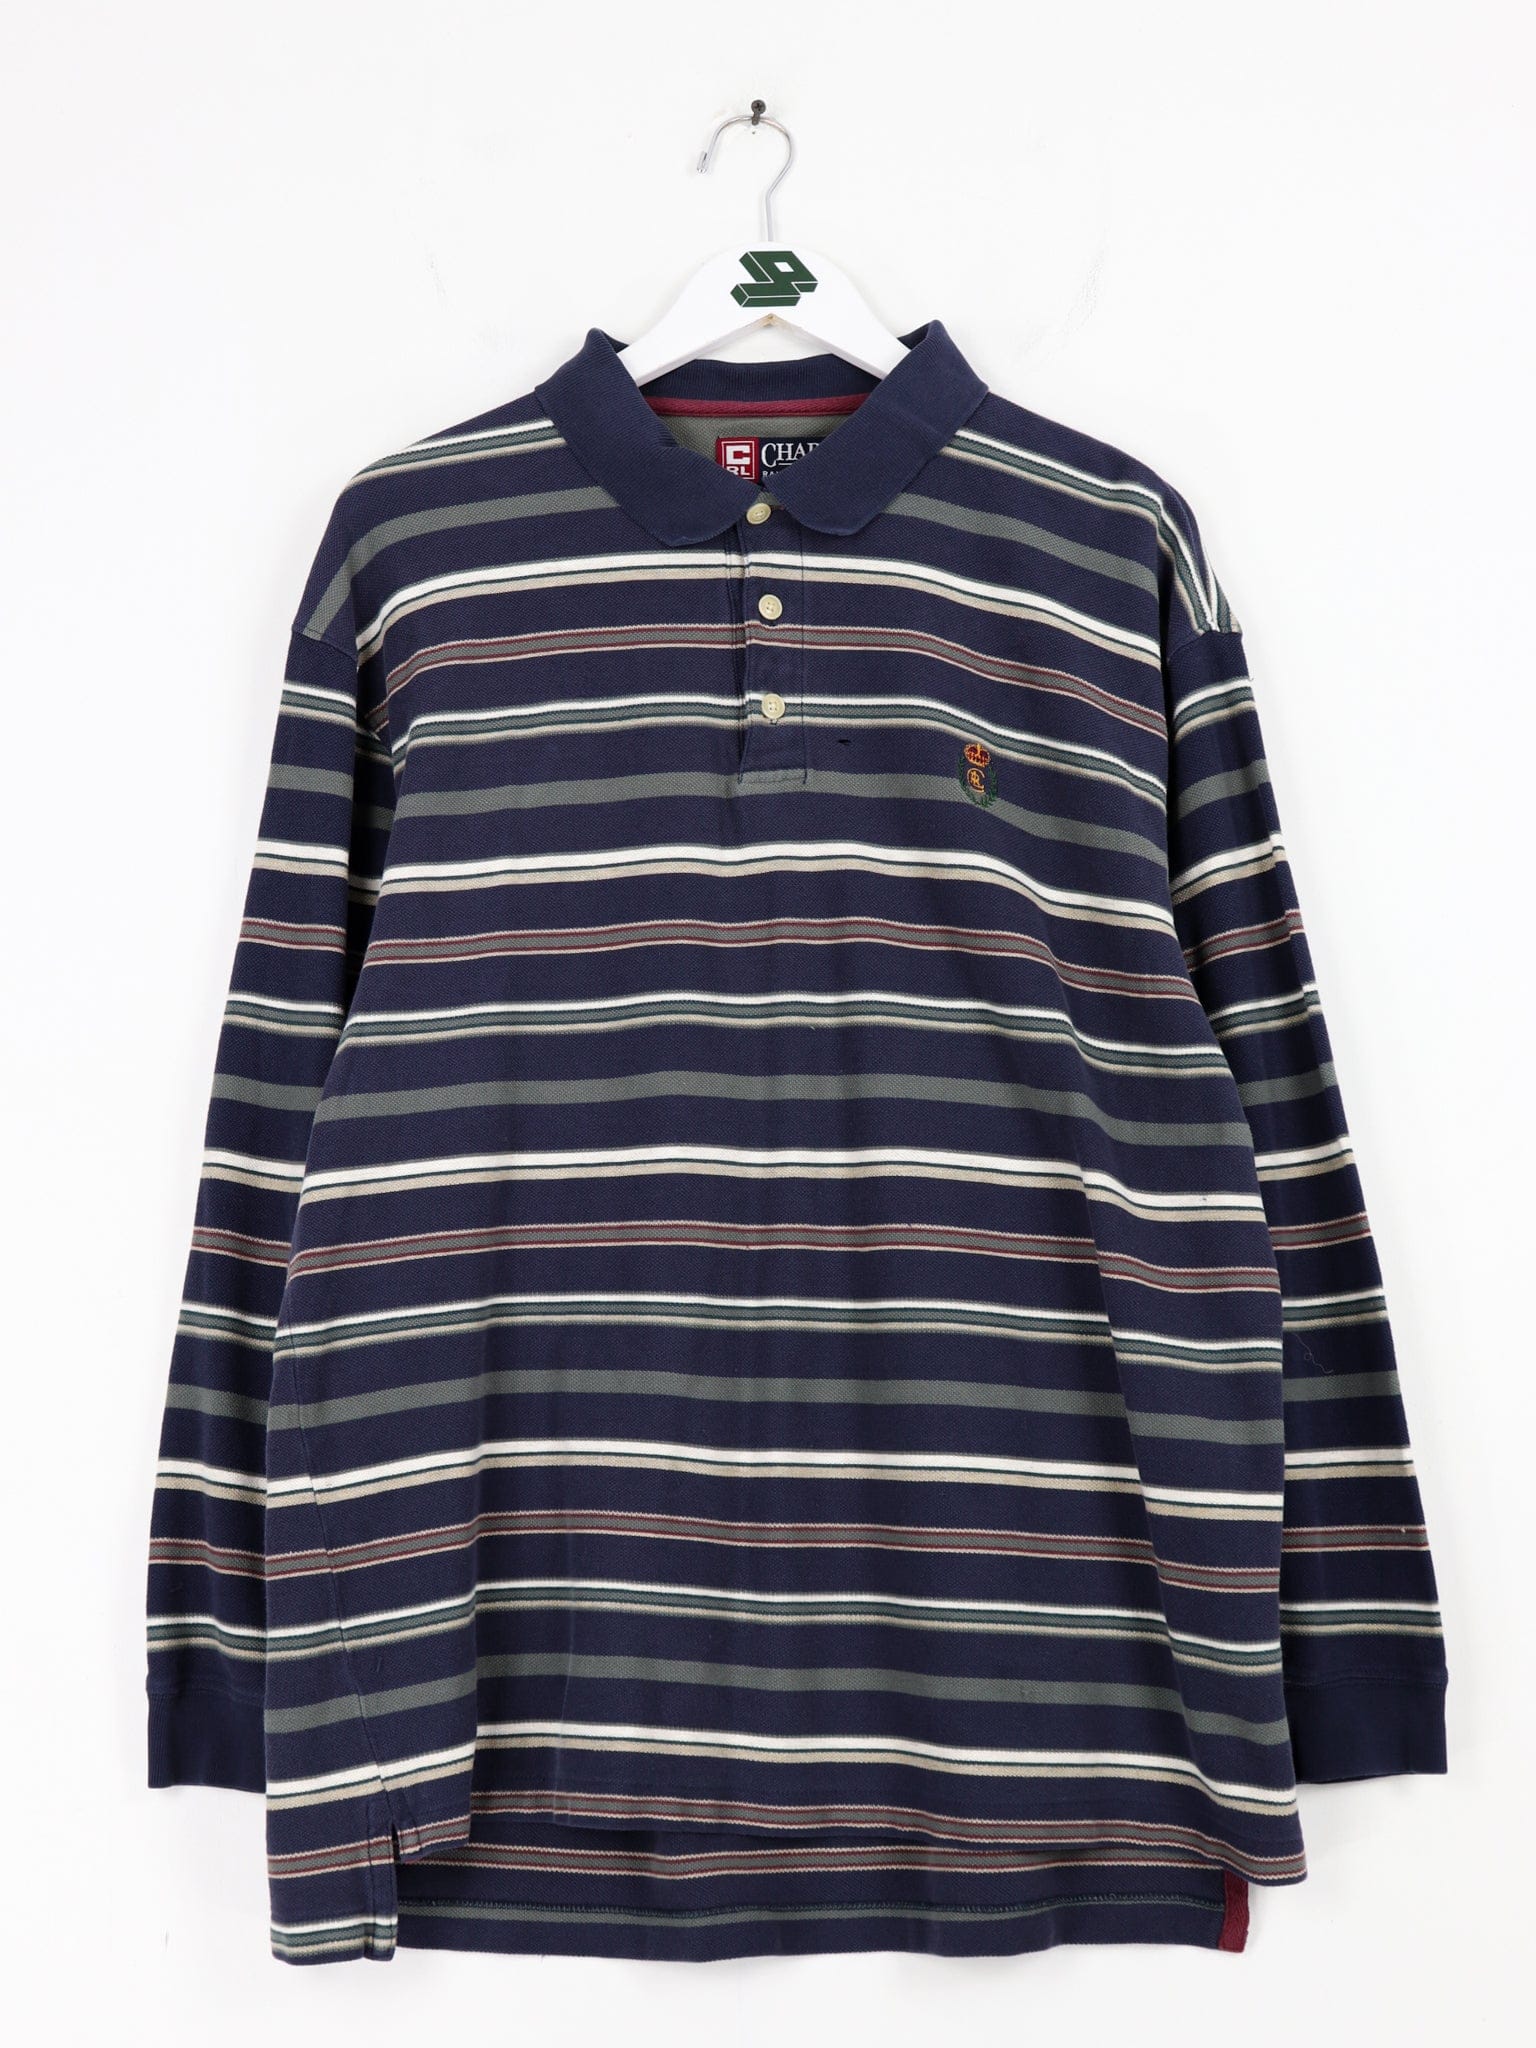 Polo by Ralph Lauren, Shirts